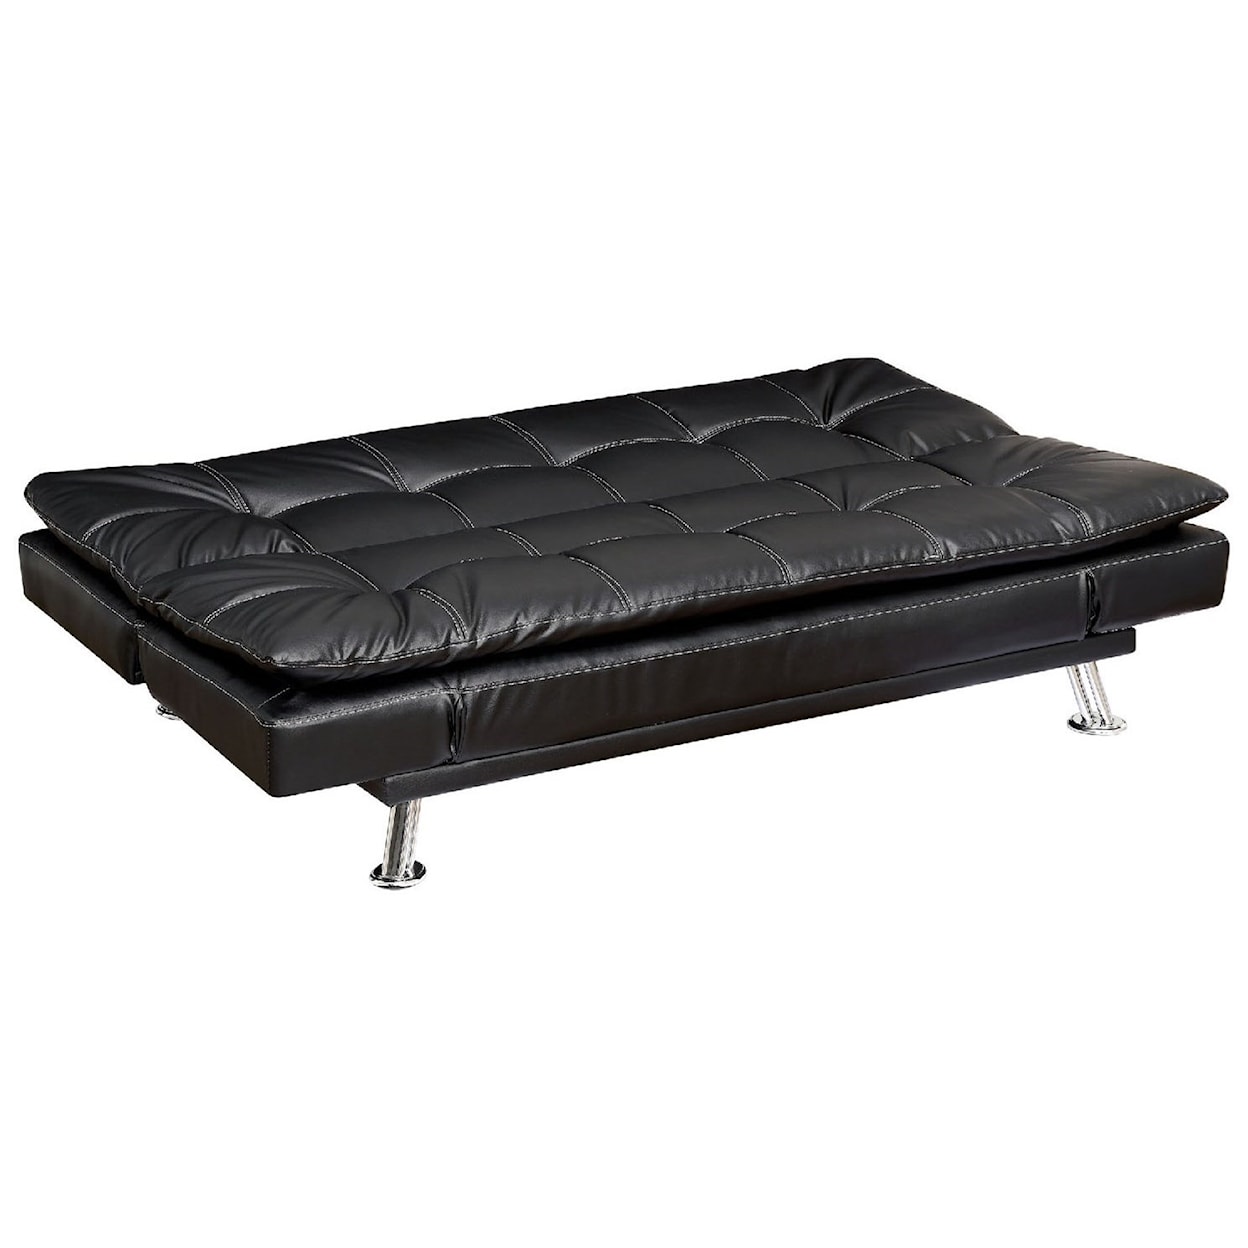 Furniture of America - FOA Hauser II Futon Sofa